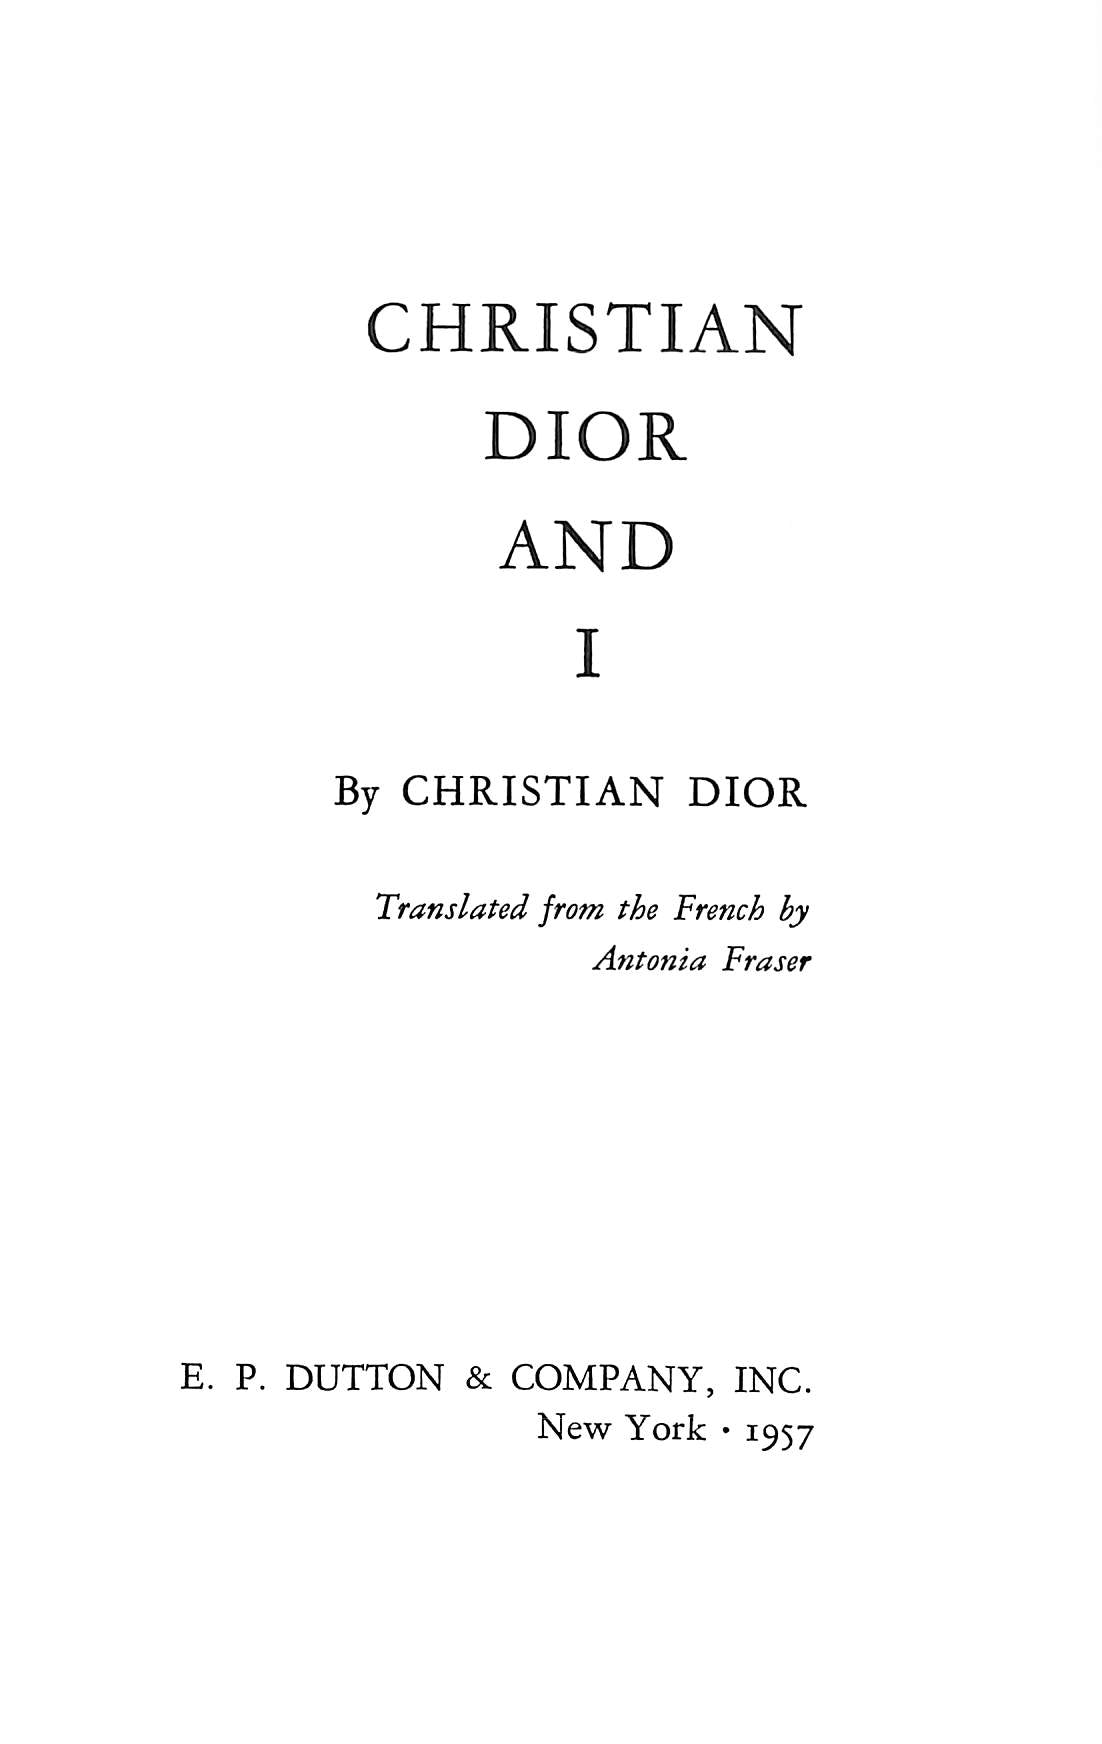 christian dior company